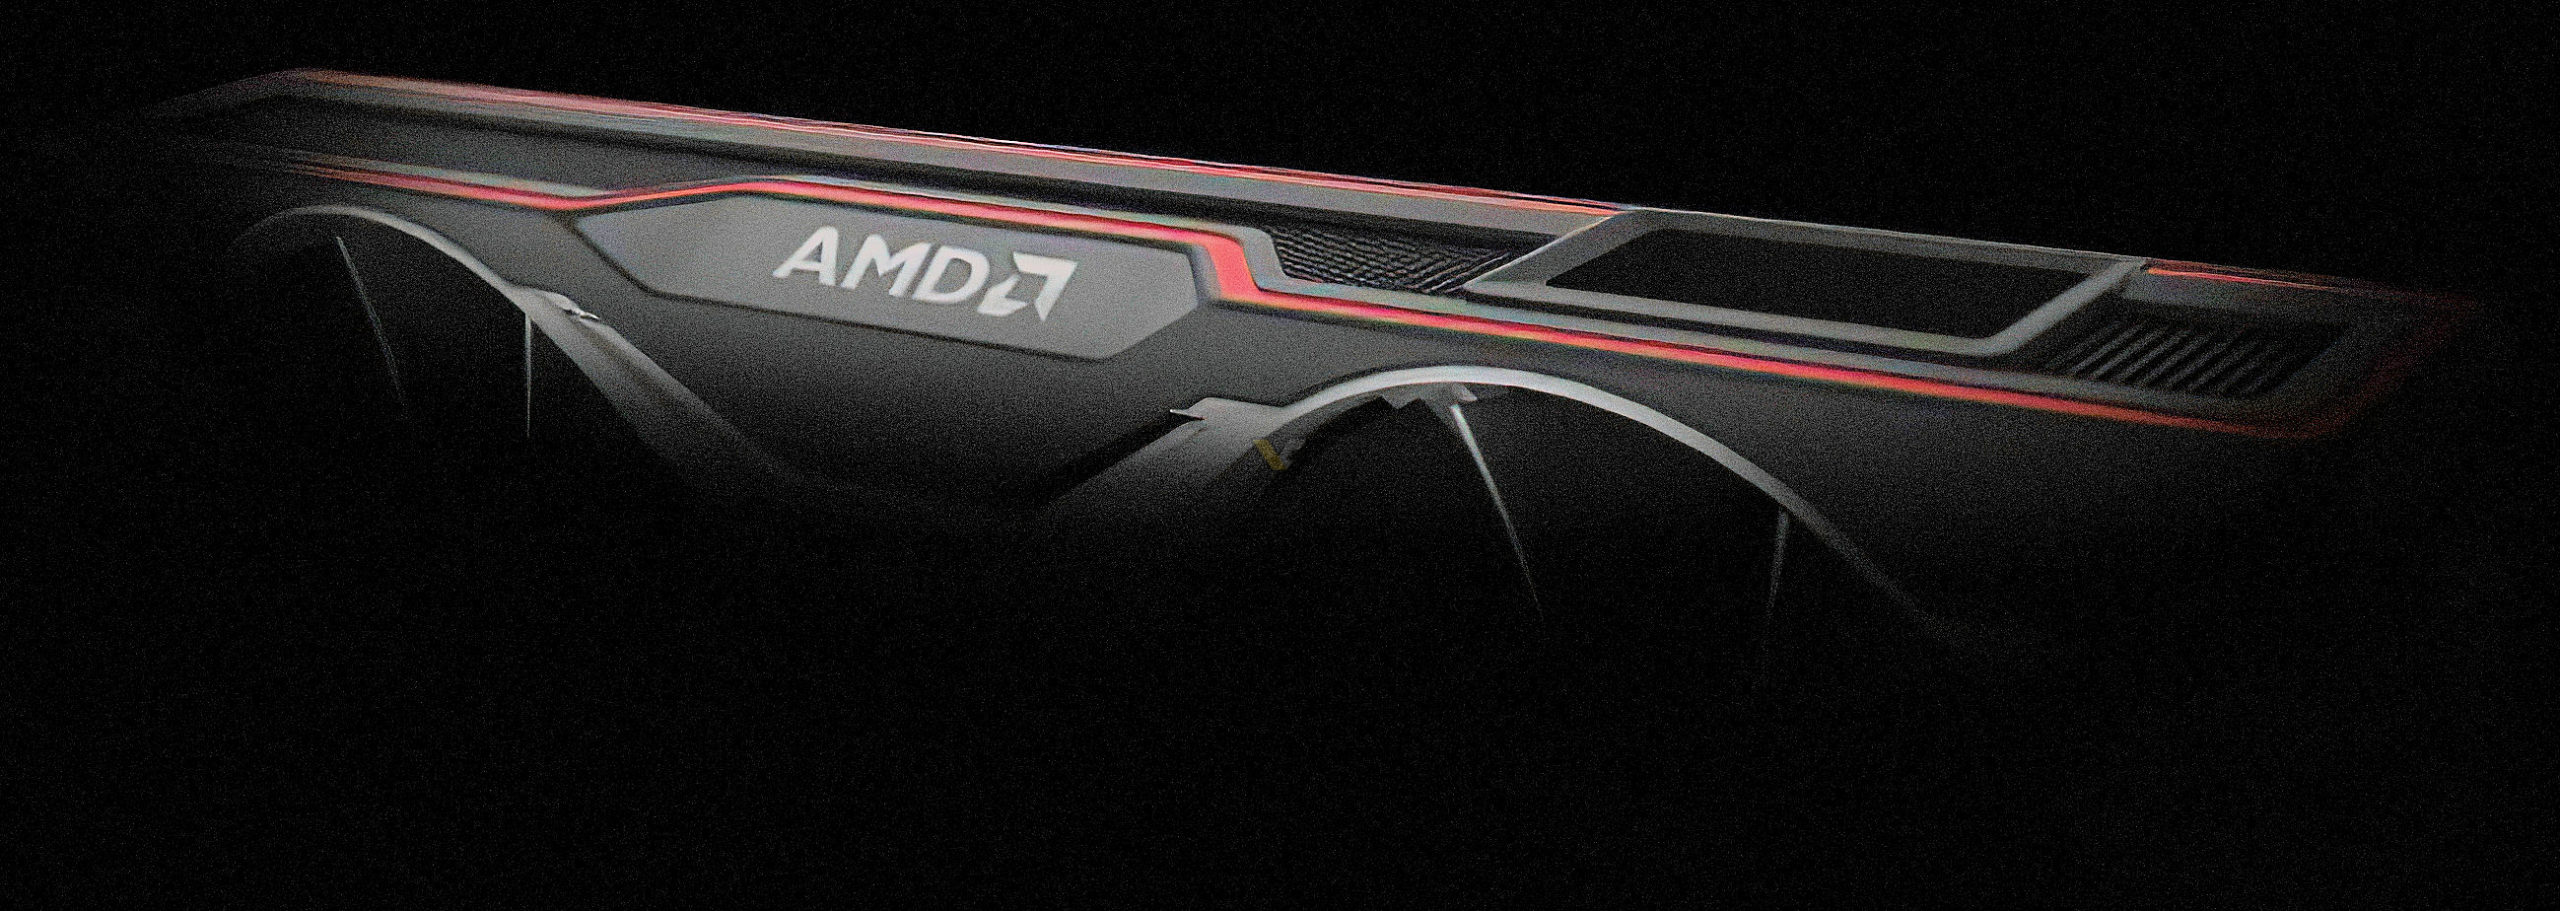 AMD-Radeon-RX-Big-Navi-1-scaled.jpg